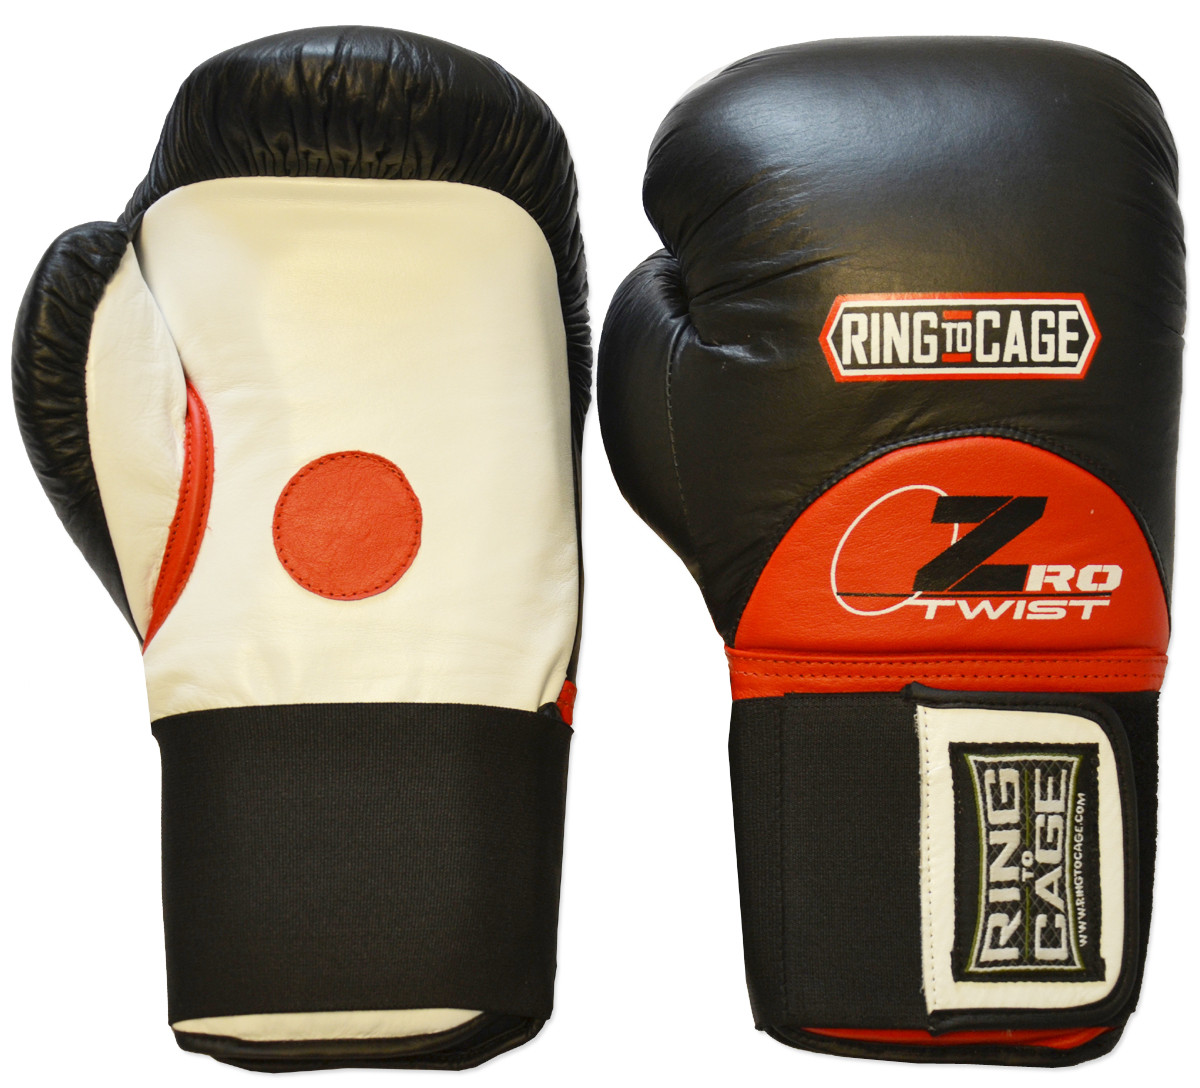 focus pad-1105, boxing gloves 10-oz Prime Leather Adult boxing gloves set training focus pads mitts mma hand wraps set white S7